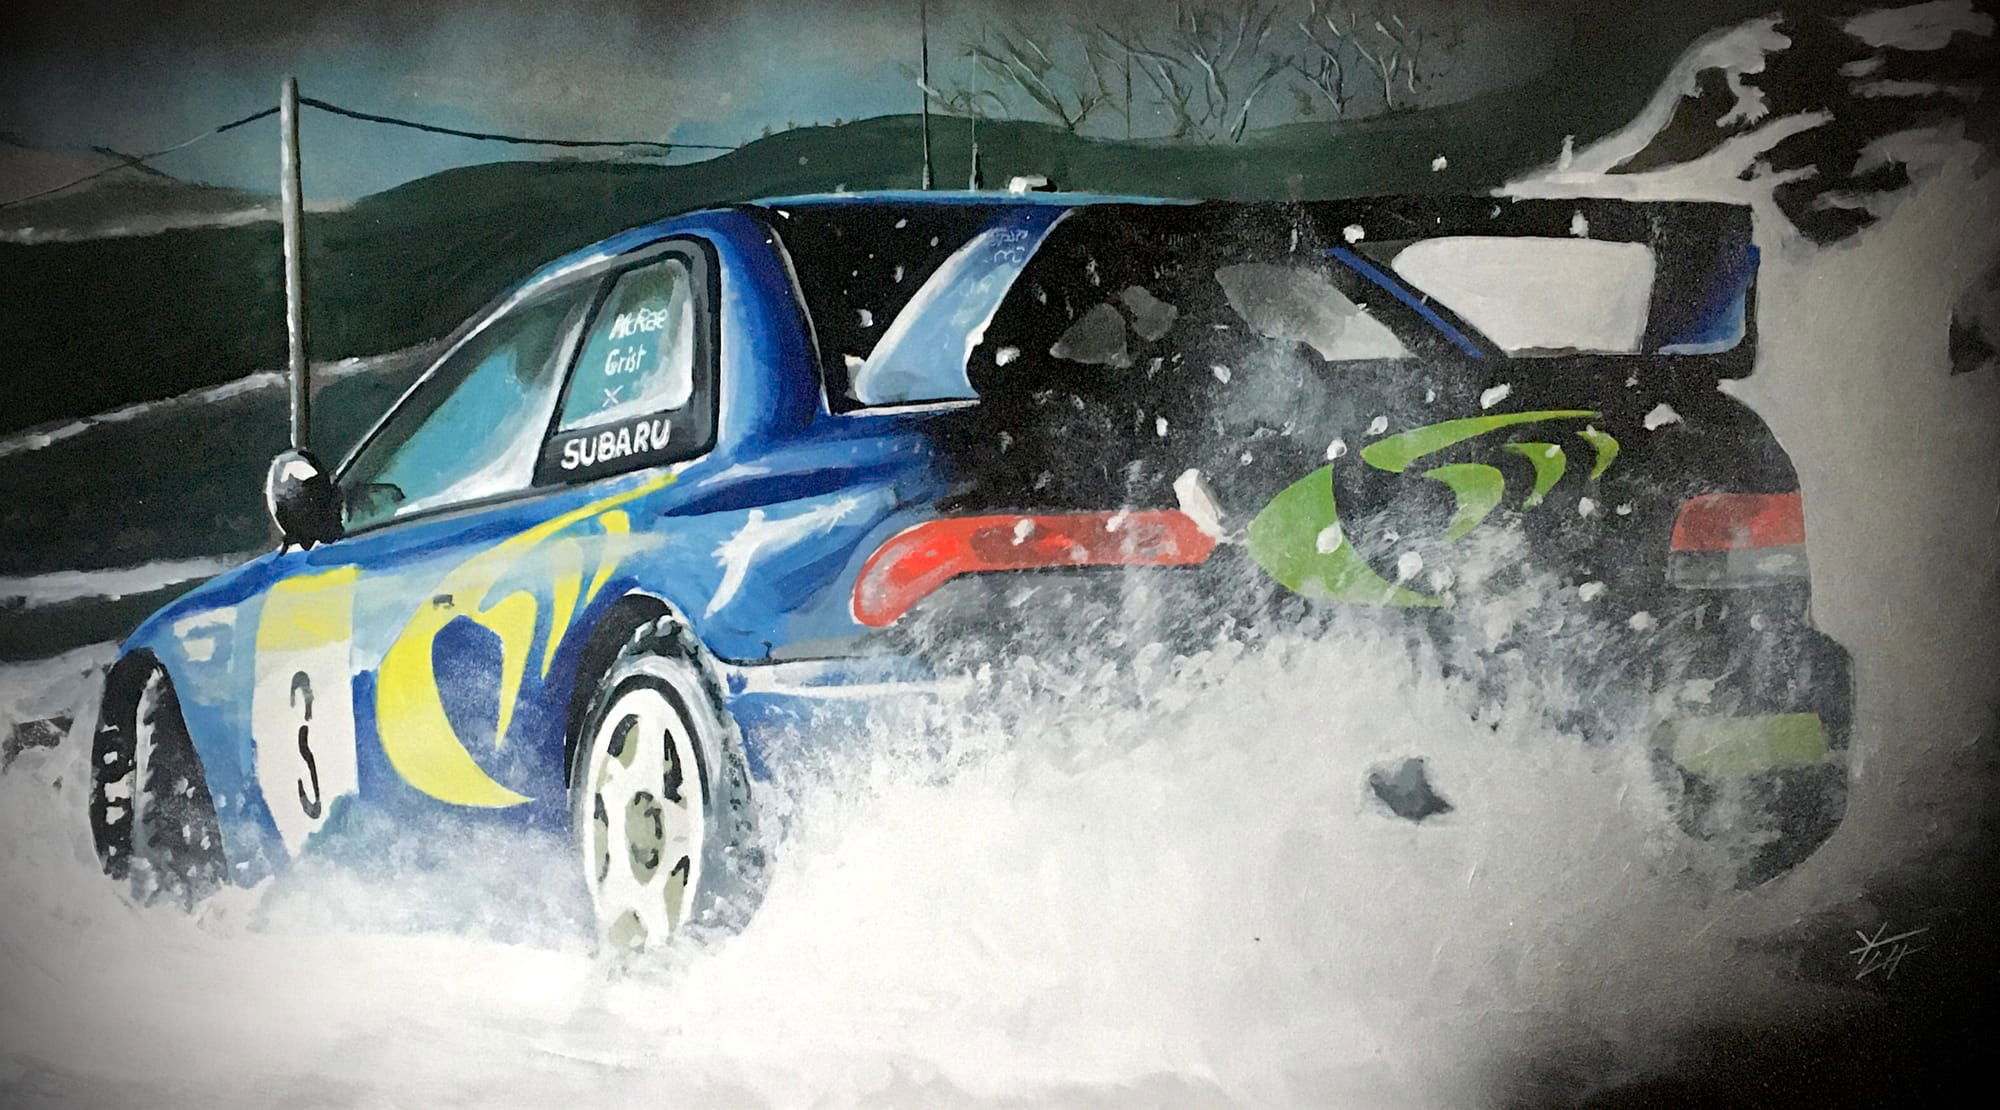 Colin McRae Subaru WRC